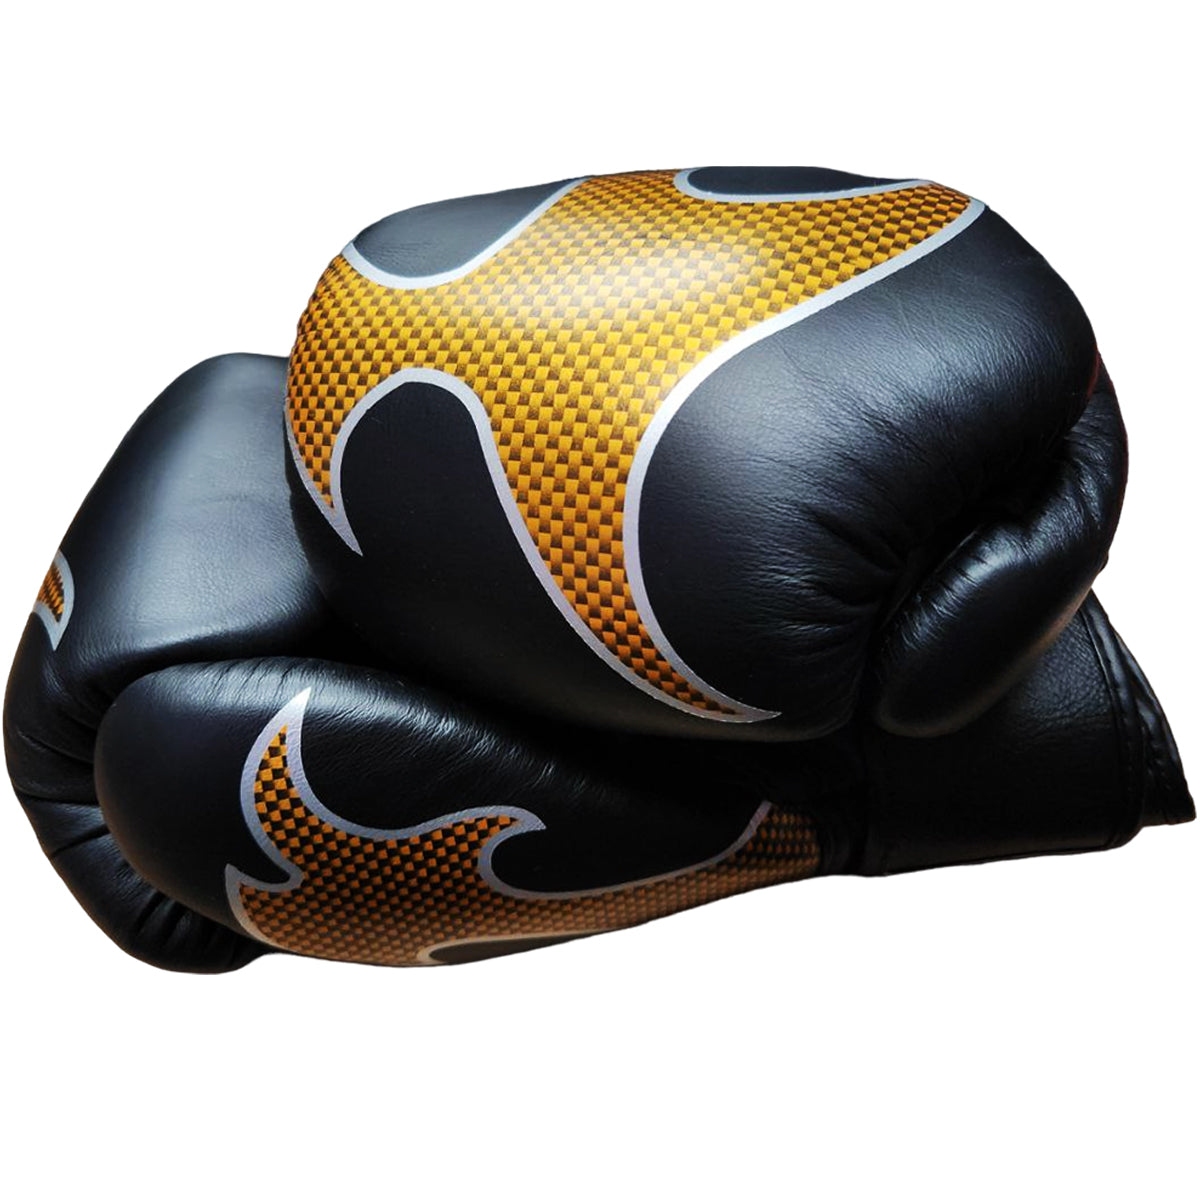 Boxing Gloves Top King TKBGEM-01 Air Black Gold Empower Creativity (Old Logo)